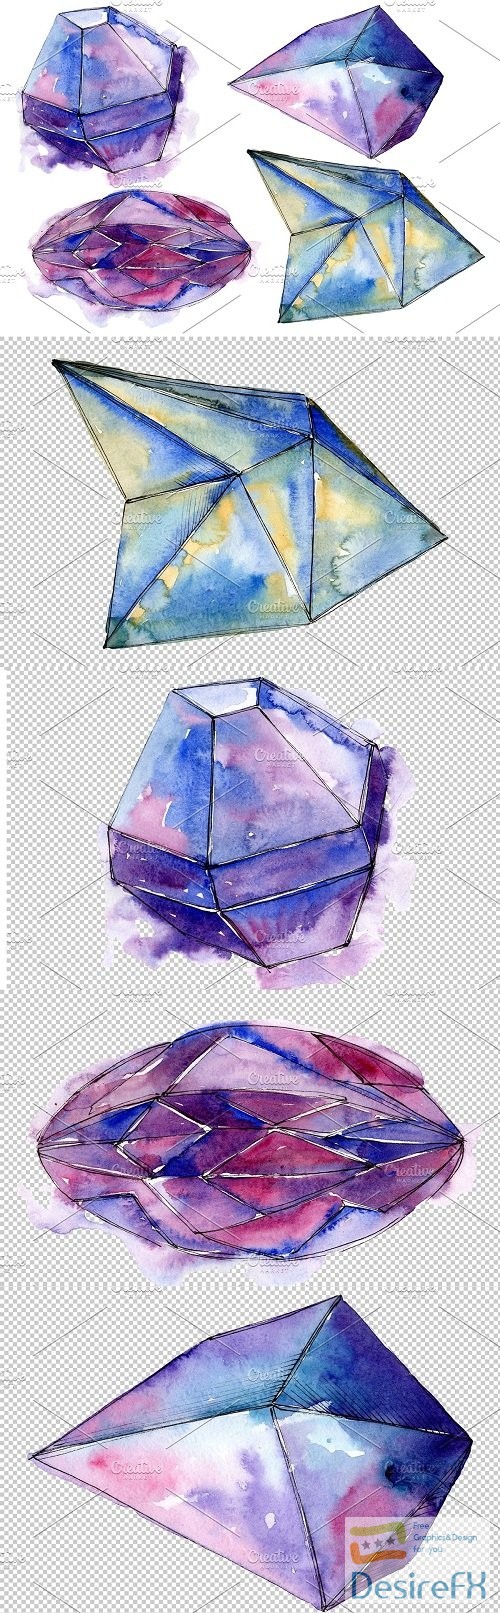 Violet crystals Watercolor png - 3539253